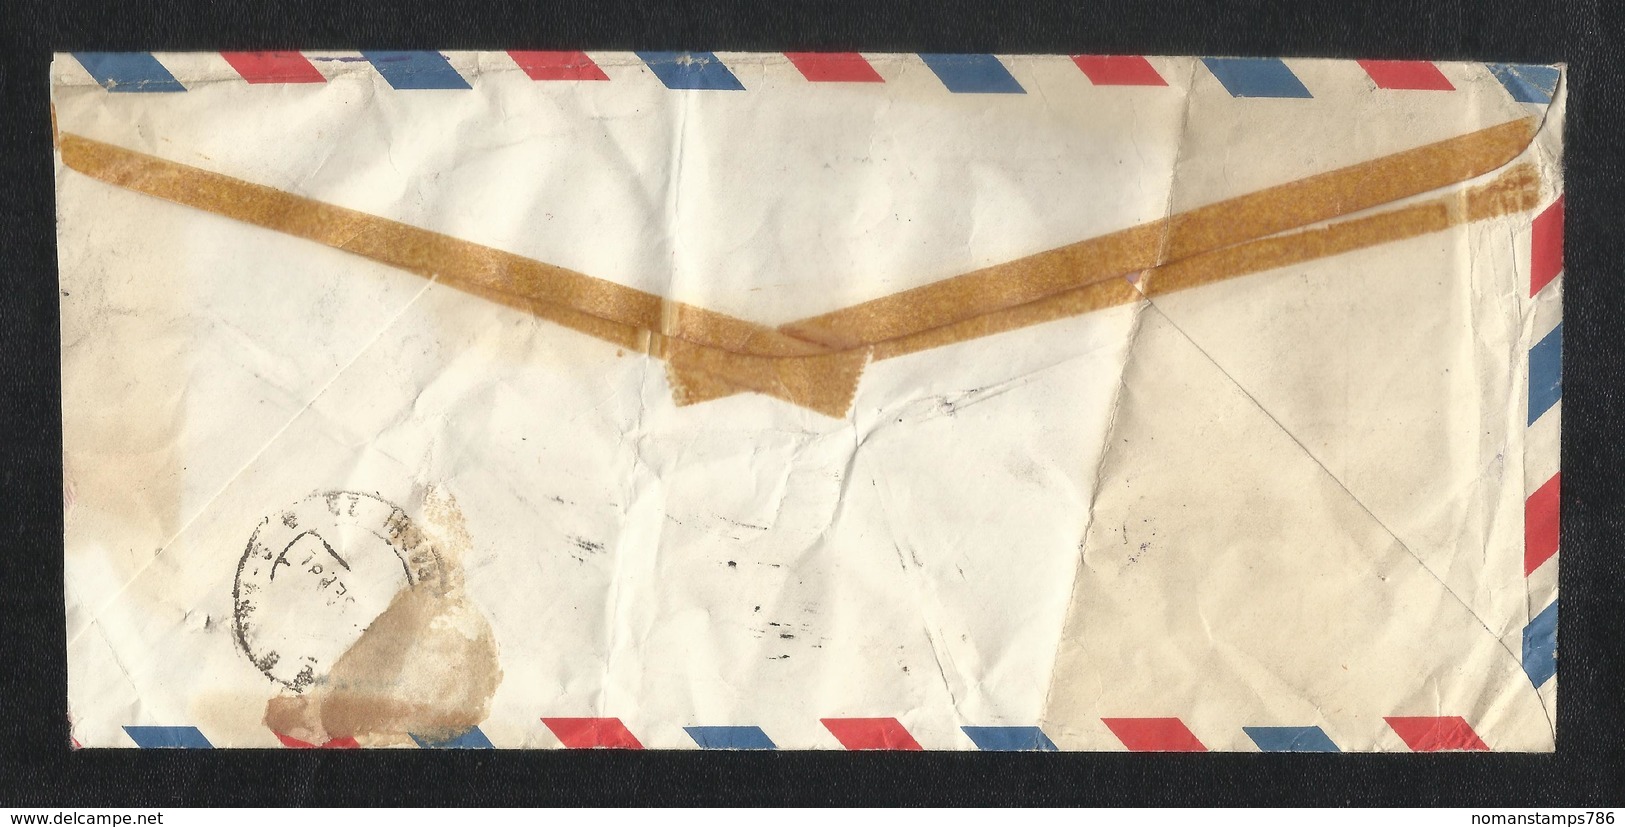 Korea 1981 Registered Air Mail Postal Used Cover Korea To Pakistan - Korea (...-1945)